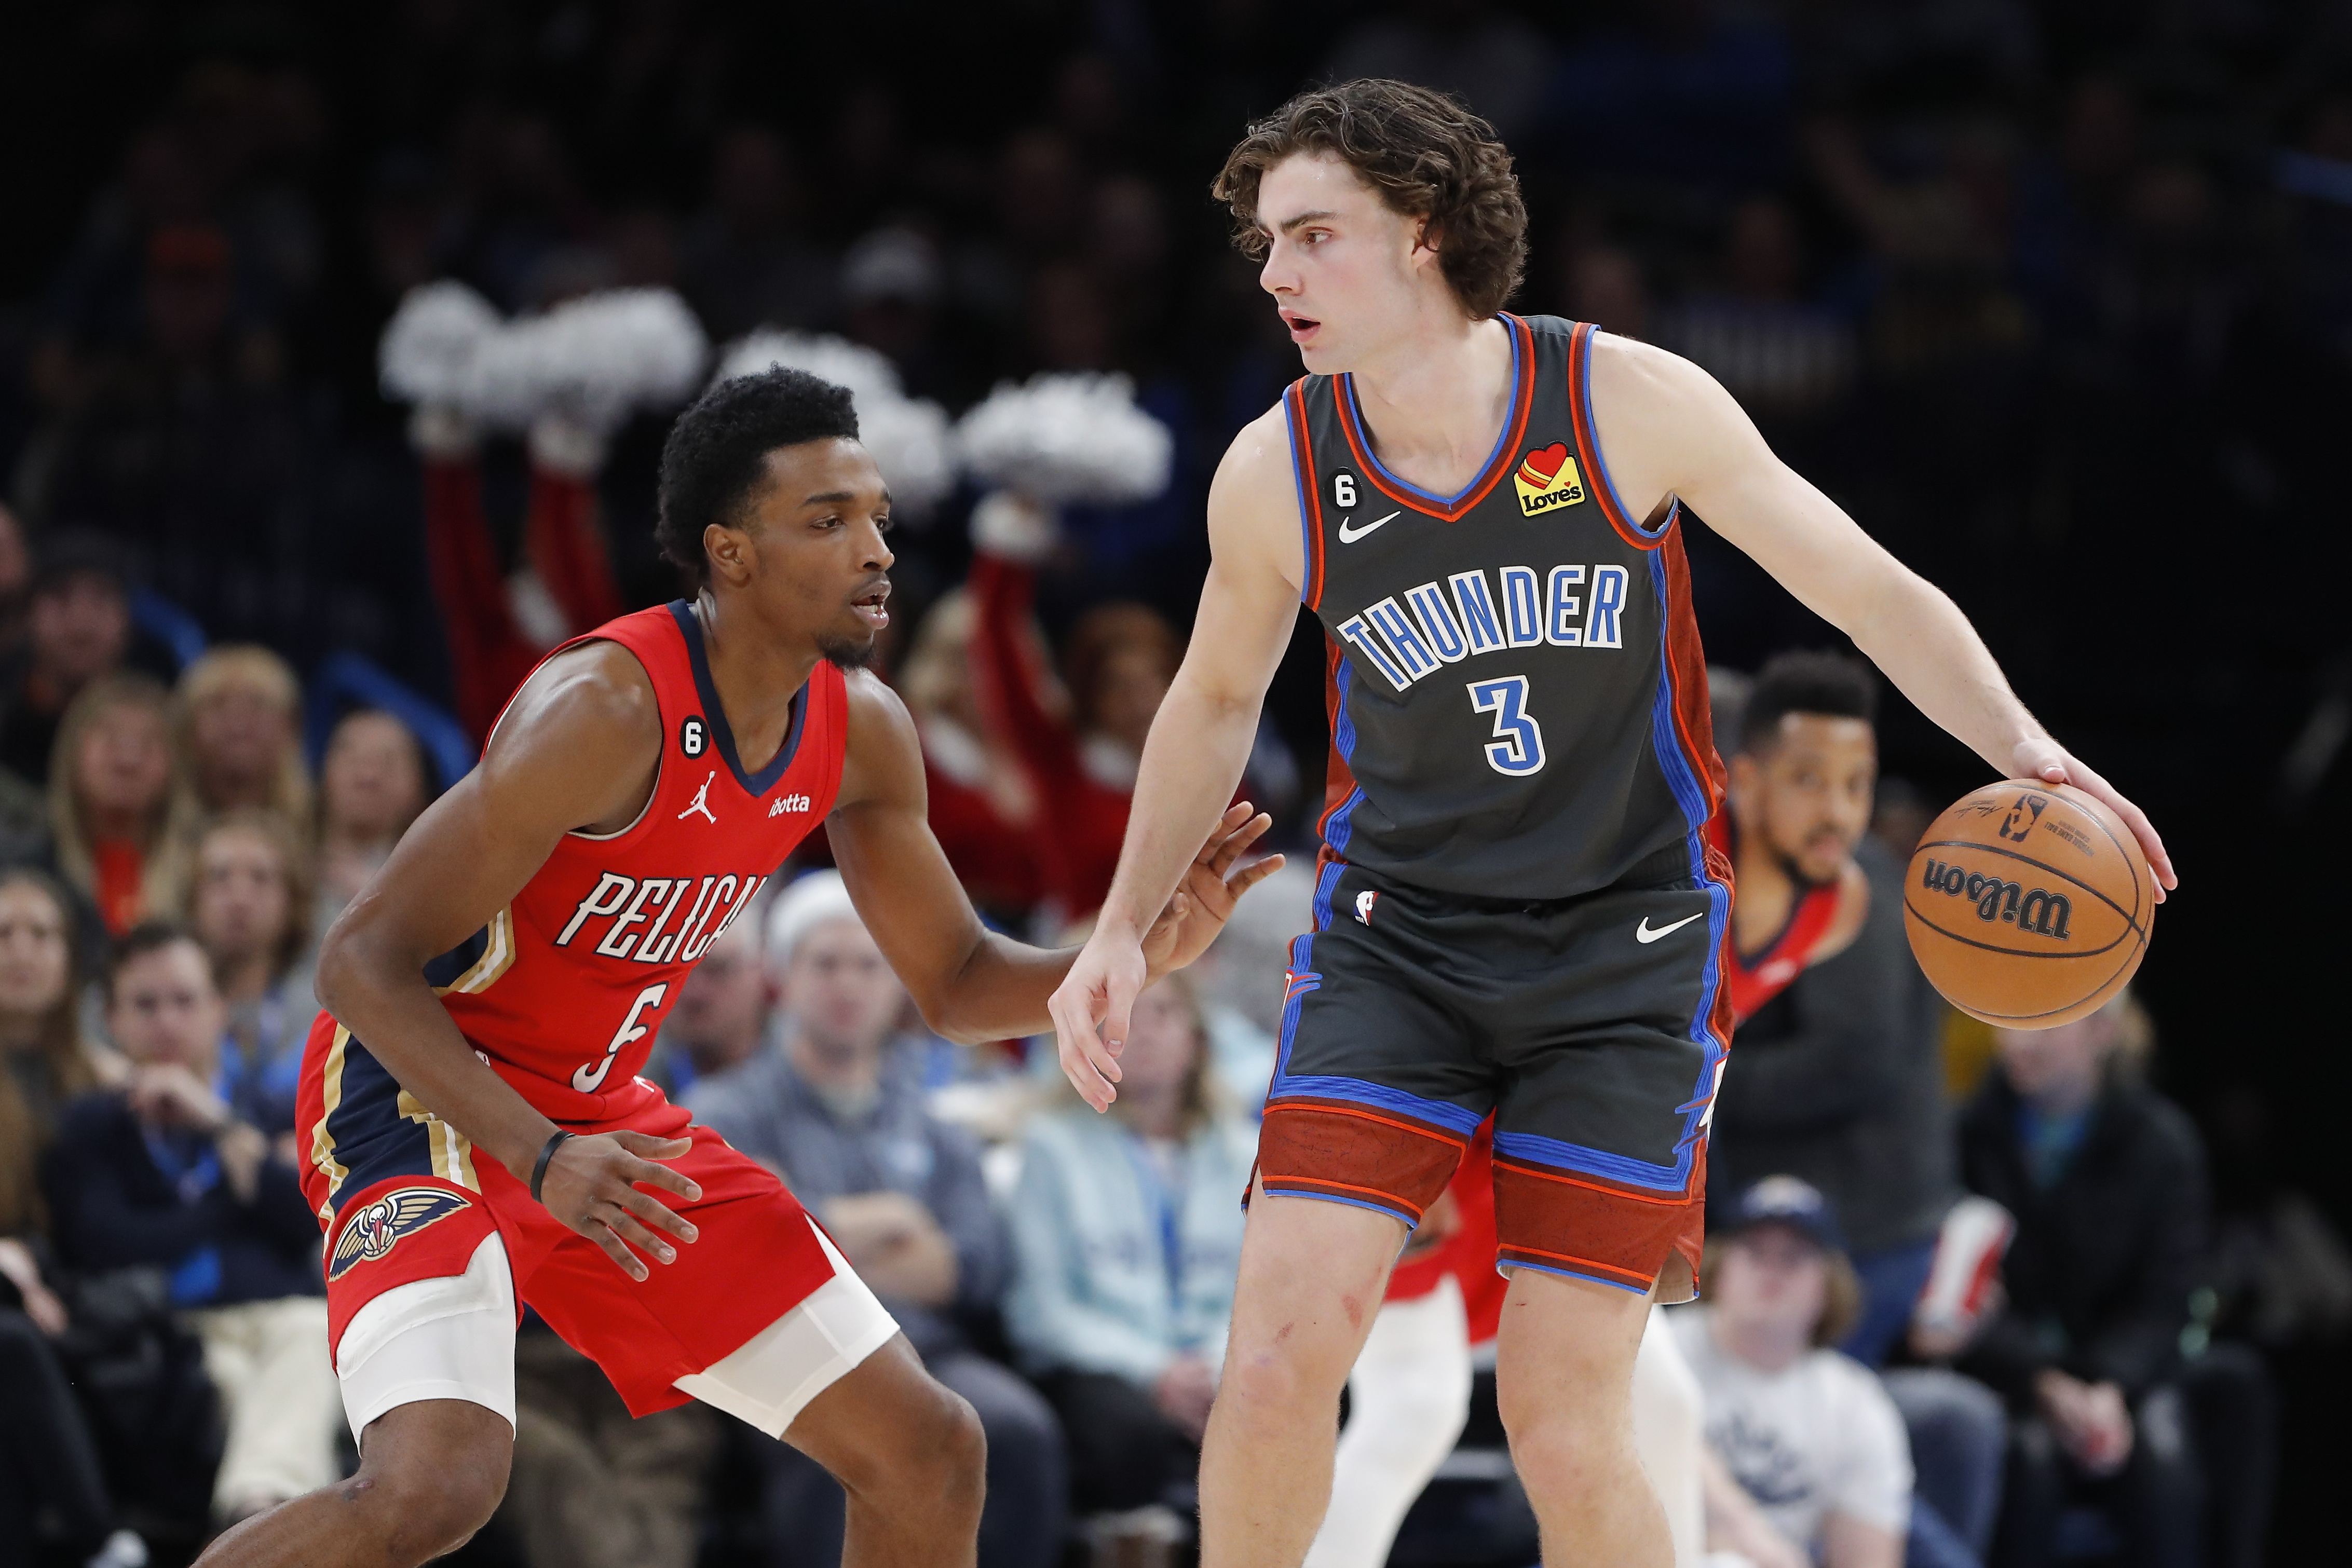 NBA: New Orleans Pelicans at Oklahoma City Thunder